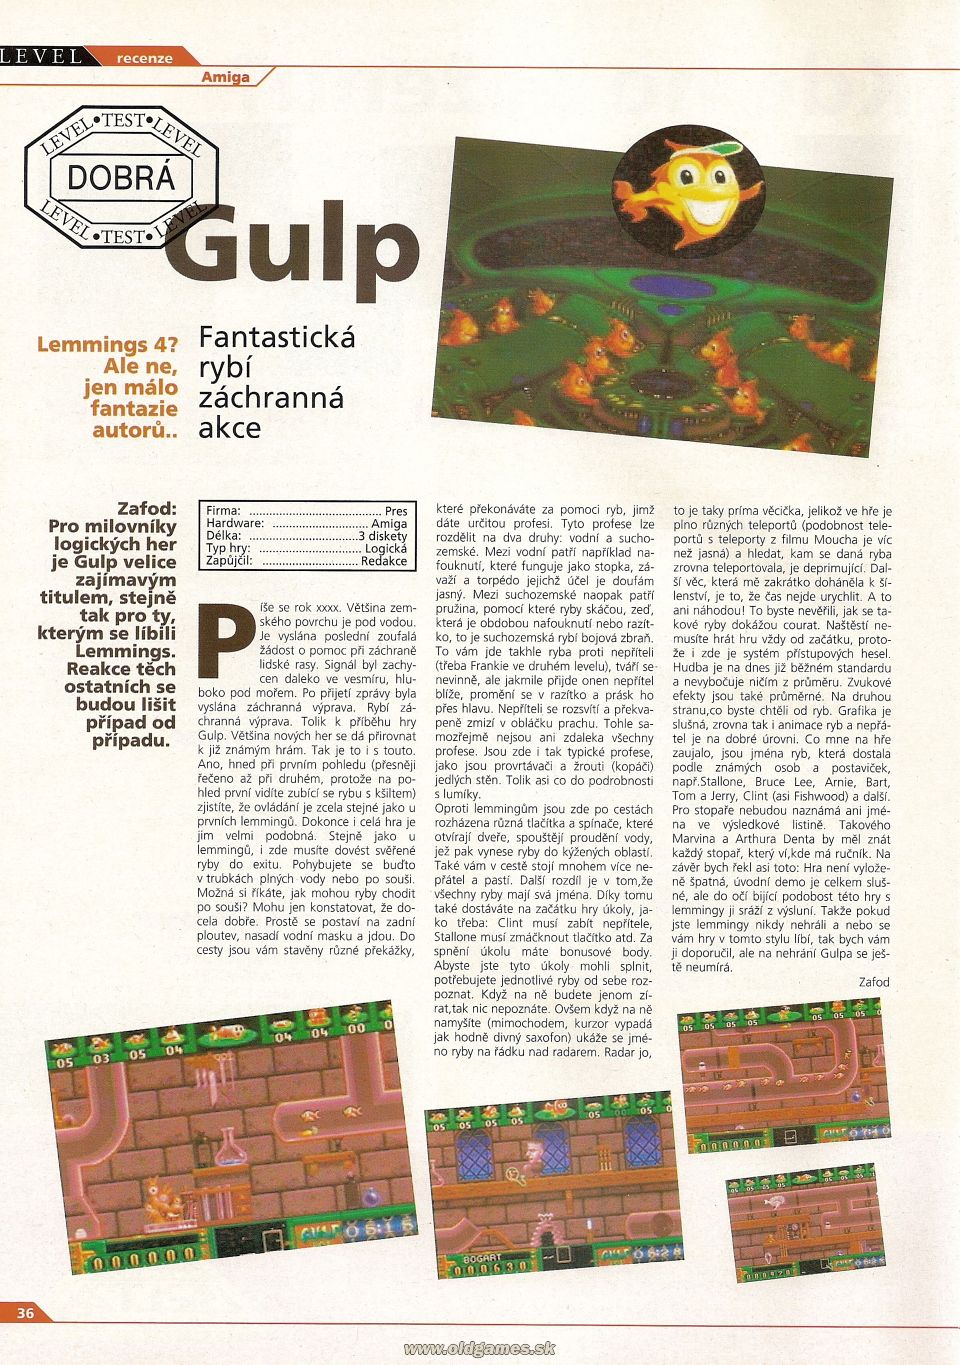 Gulp - Amiga